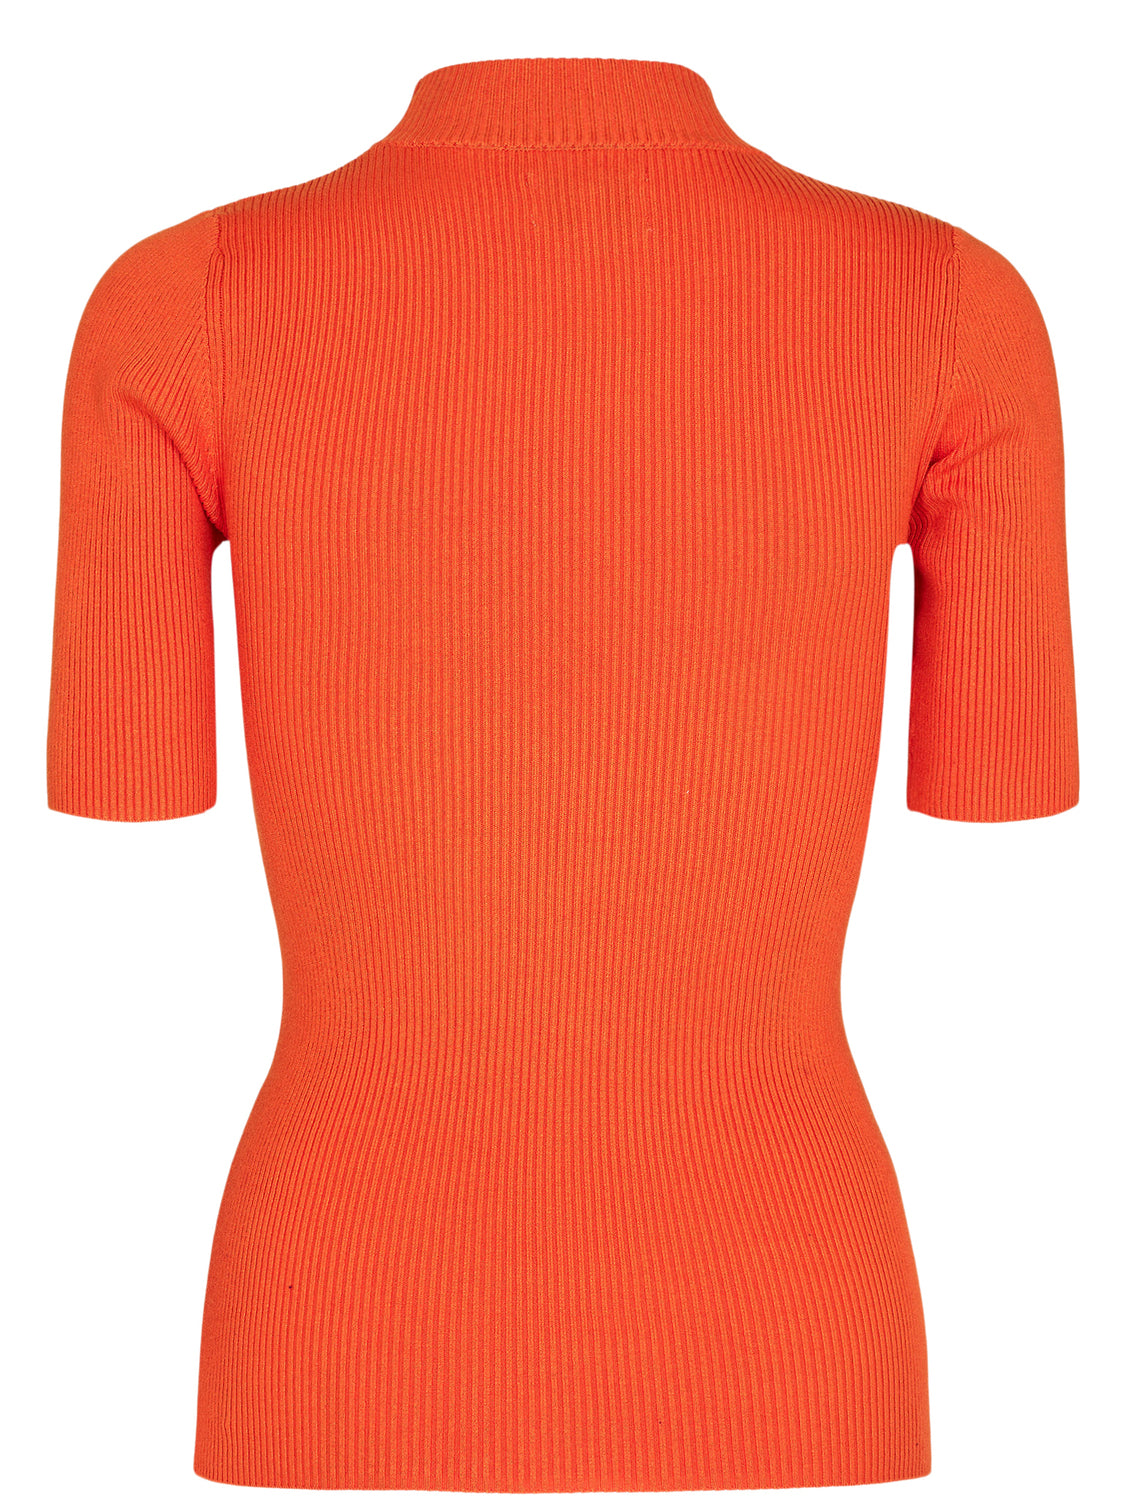 
                  
                    NUBIA Red Orange Short Sleeve Jumper
                  
                